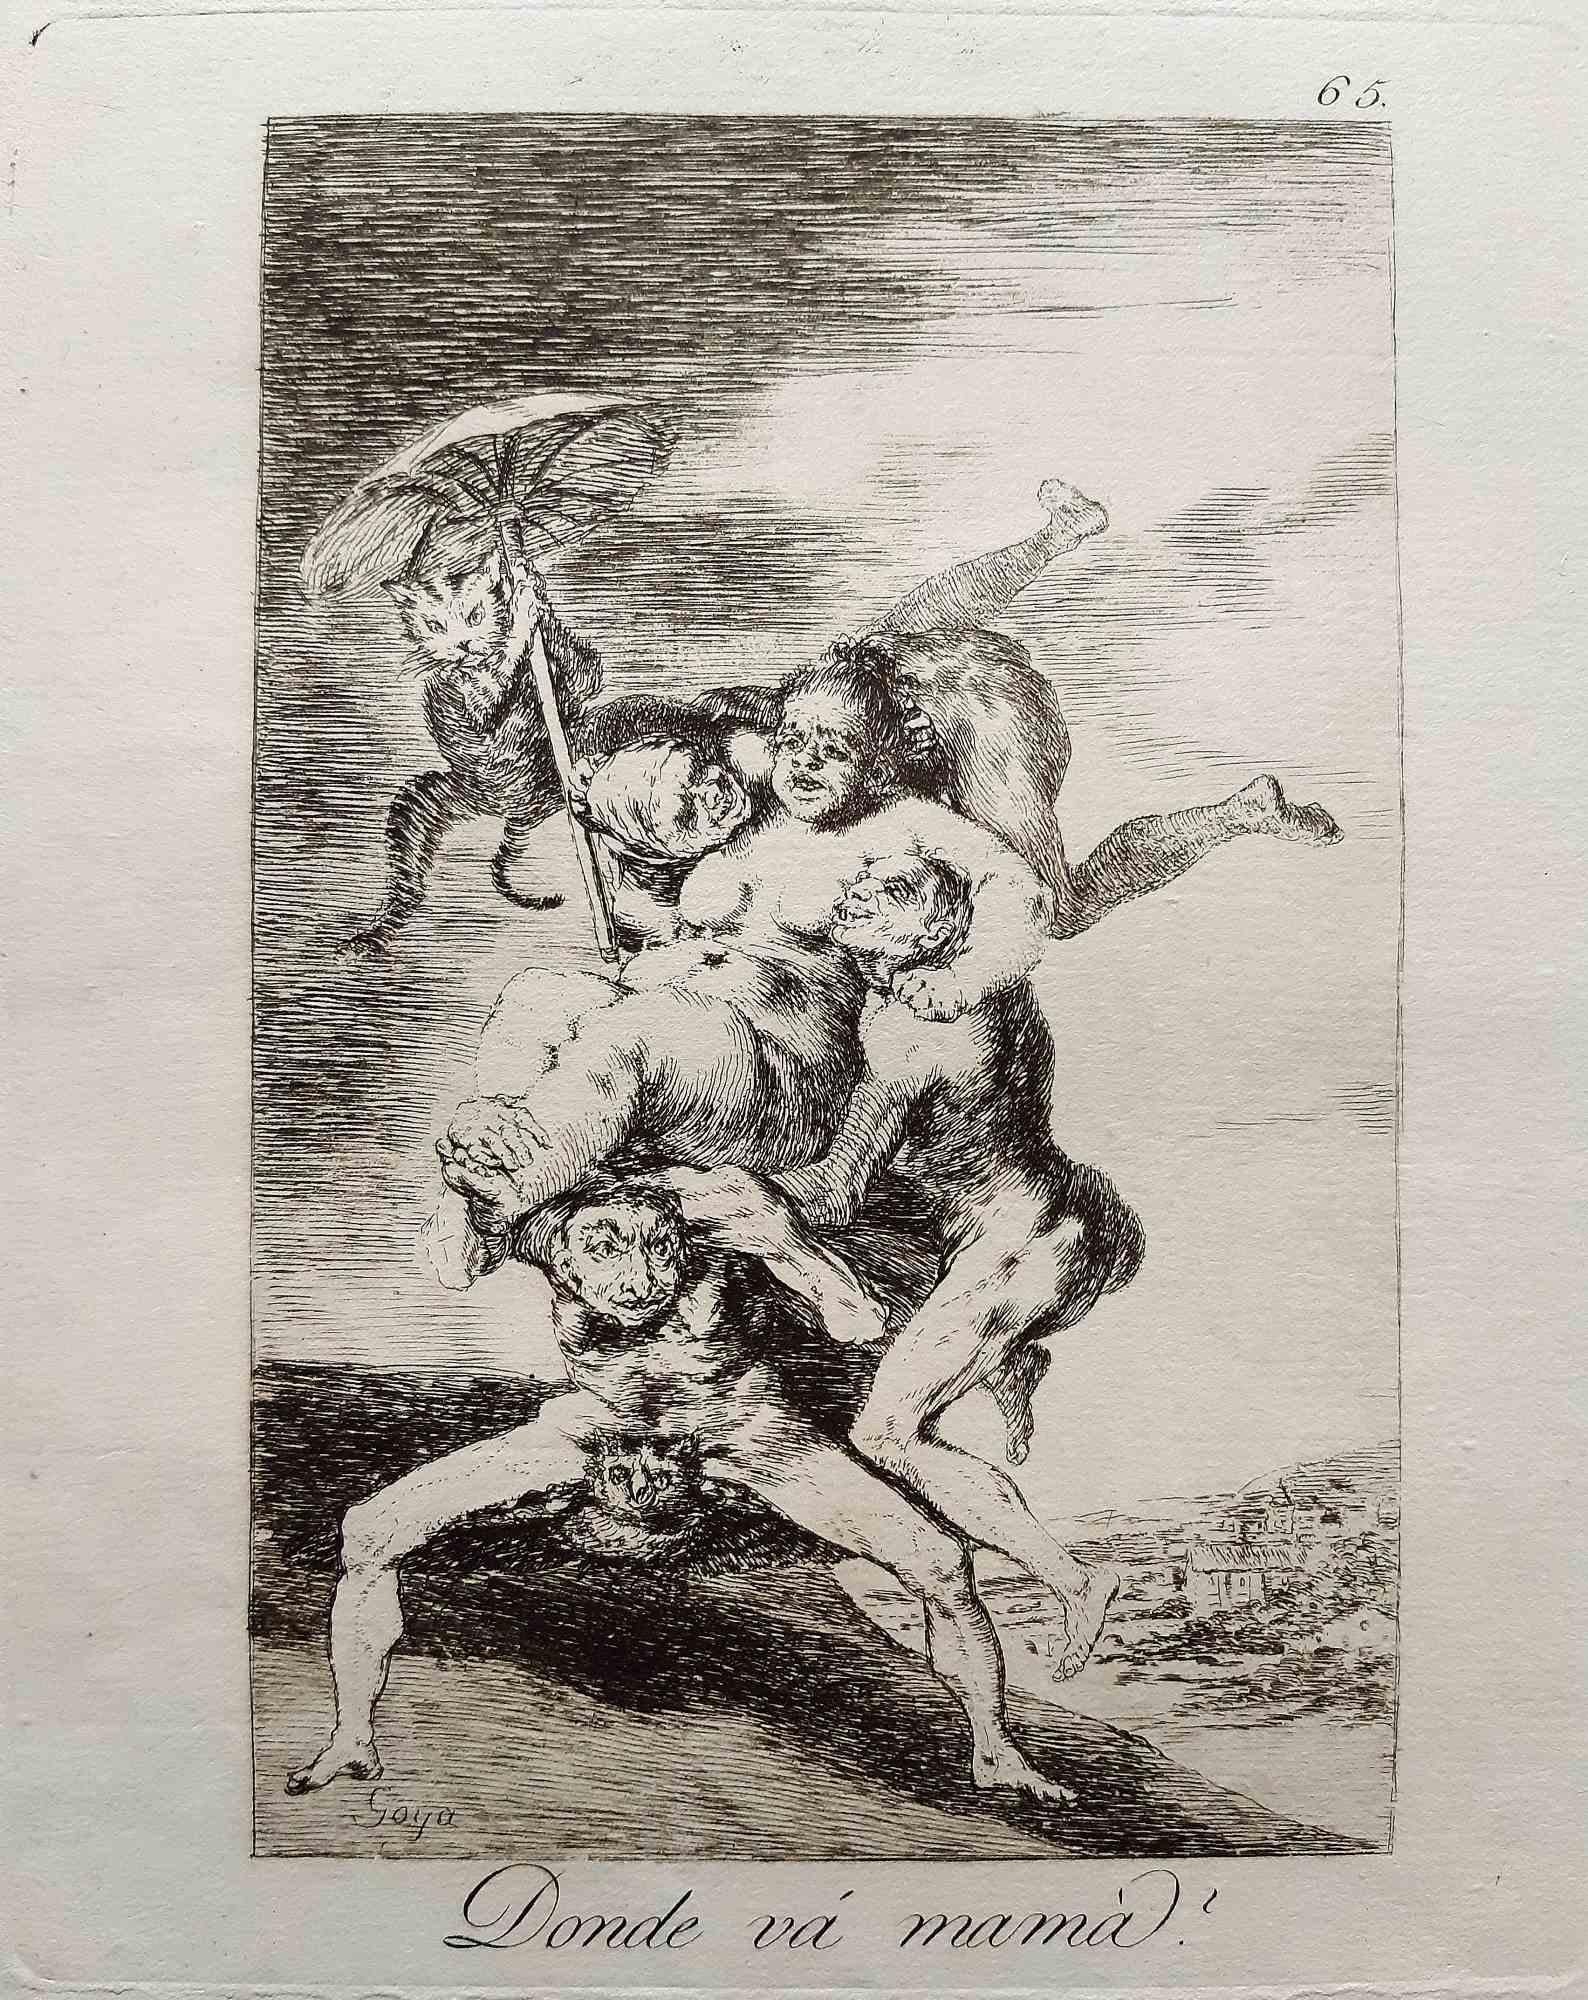 Donde va Mama from Los Caprichos - Etching by Francisco Goya - 1799